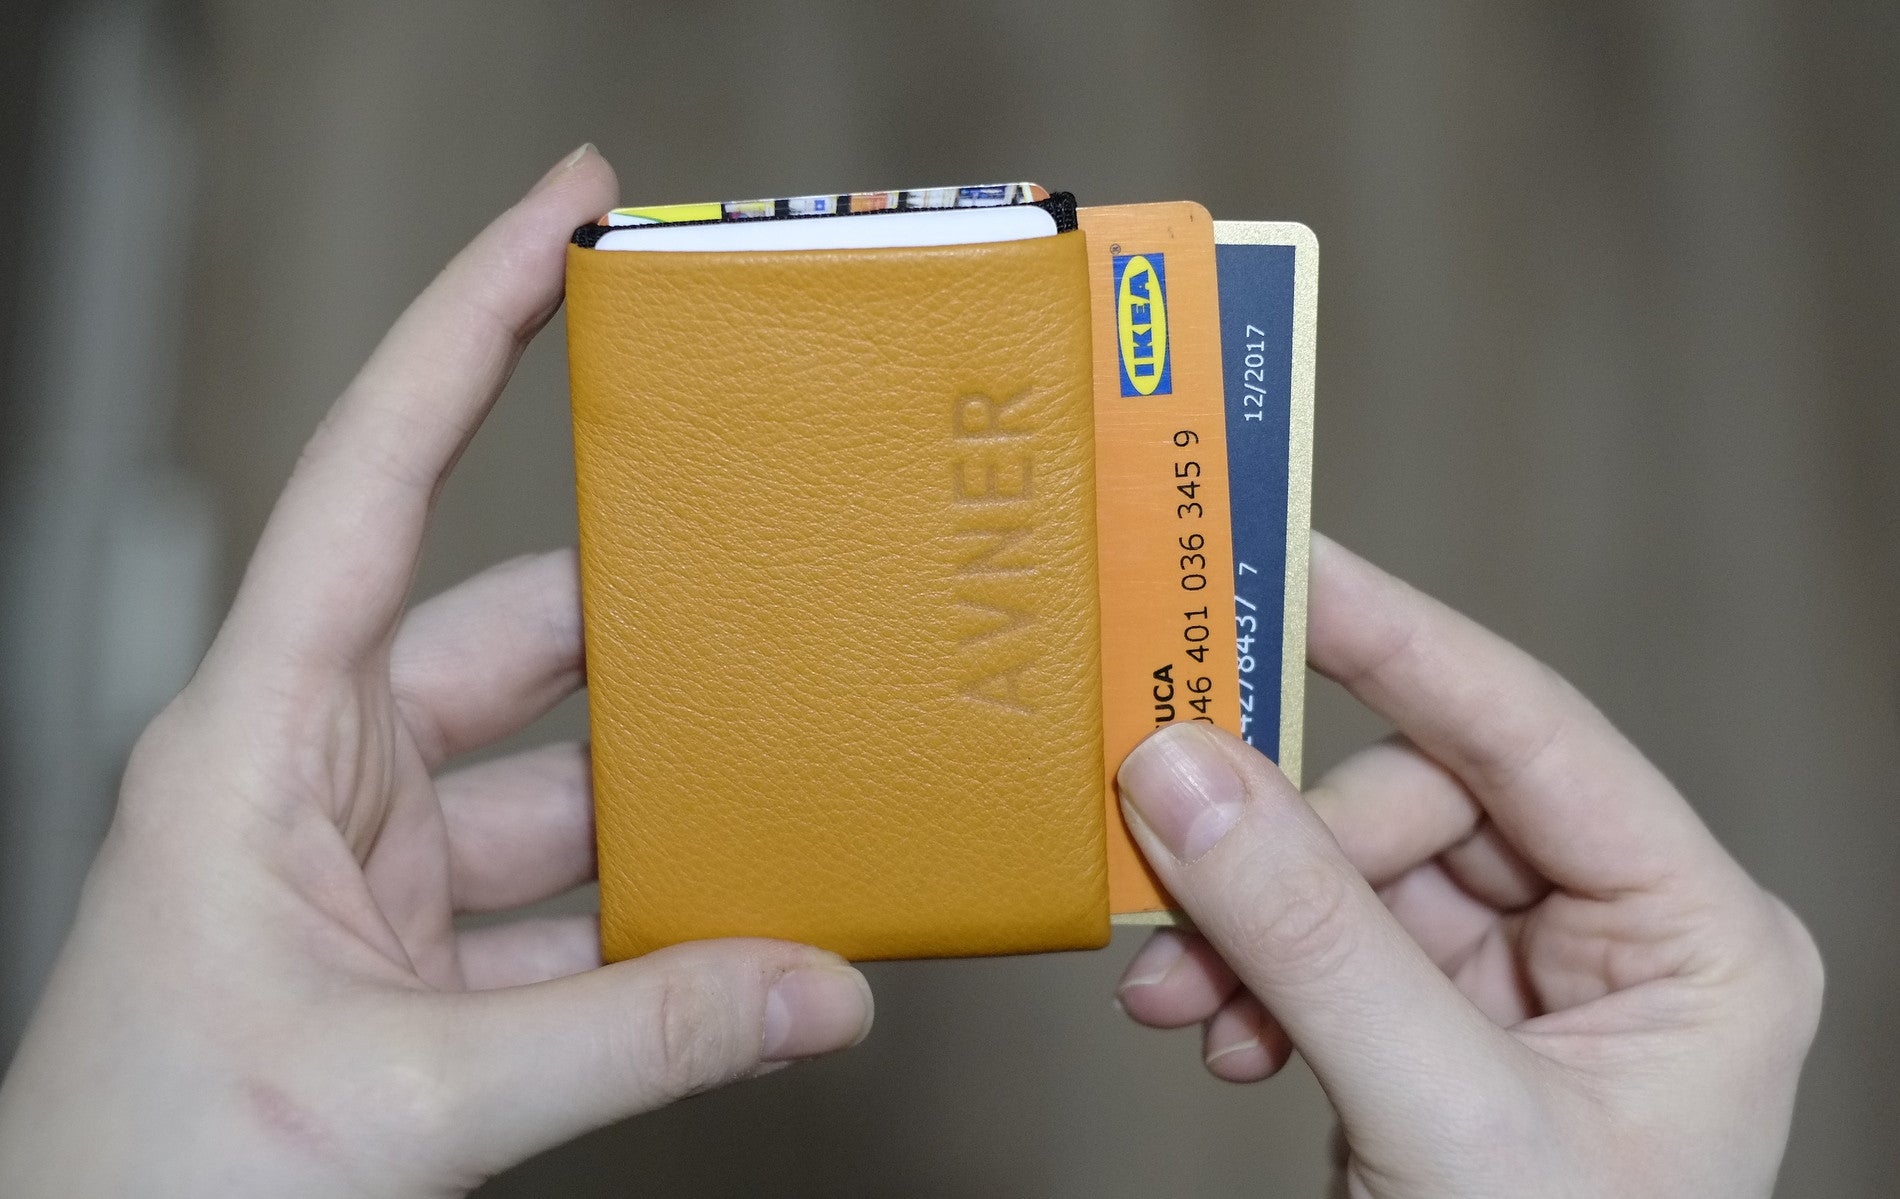 Nero Wallet Leather Slim Mens Wallets RFID Blocking Minimalist Wallet – NERO  - Minimalist Wallets with RFID protection